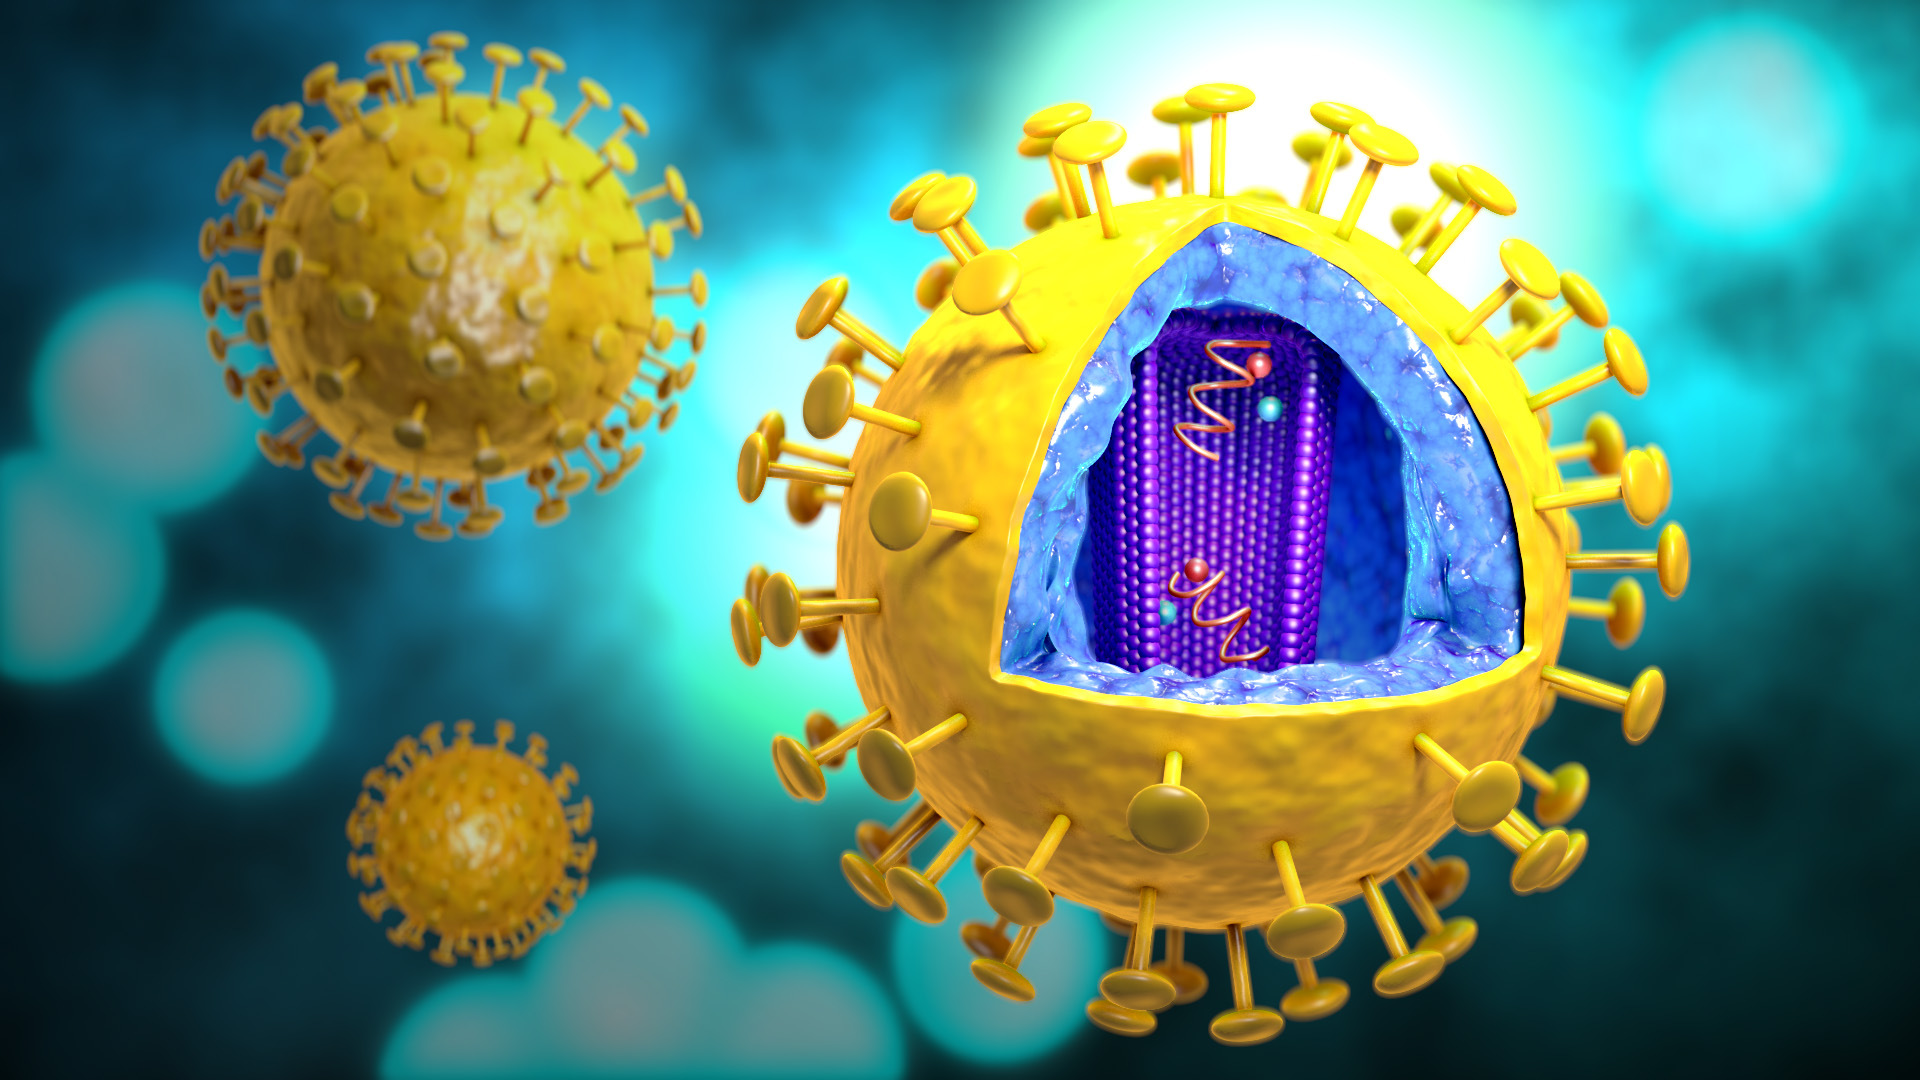 Human immunodeficiency. Вирус иммунодефицита человека (Human Immunodeficiency virus). Омикрон коронавирус. Модель вируса. ВИЧ фотографии вируса.